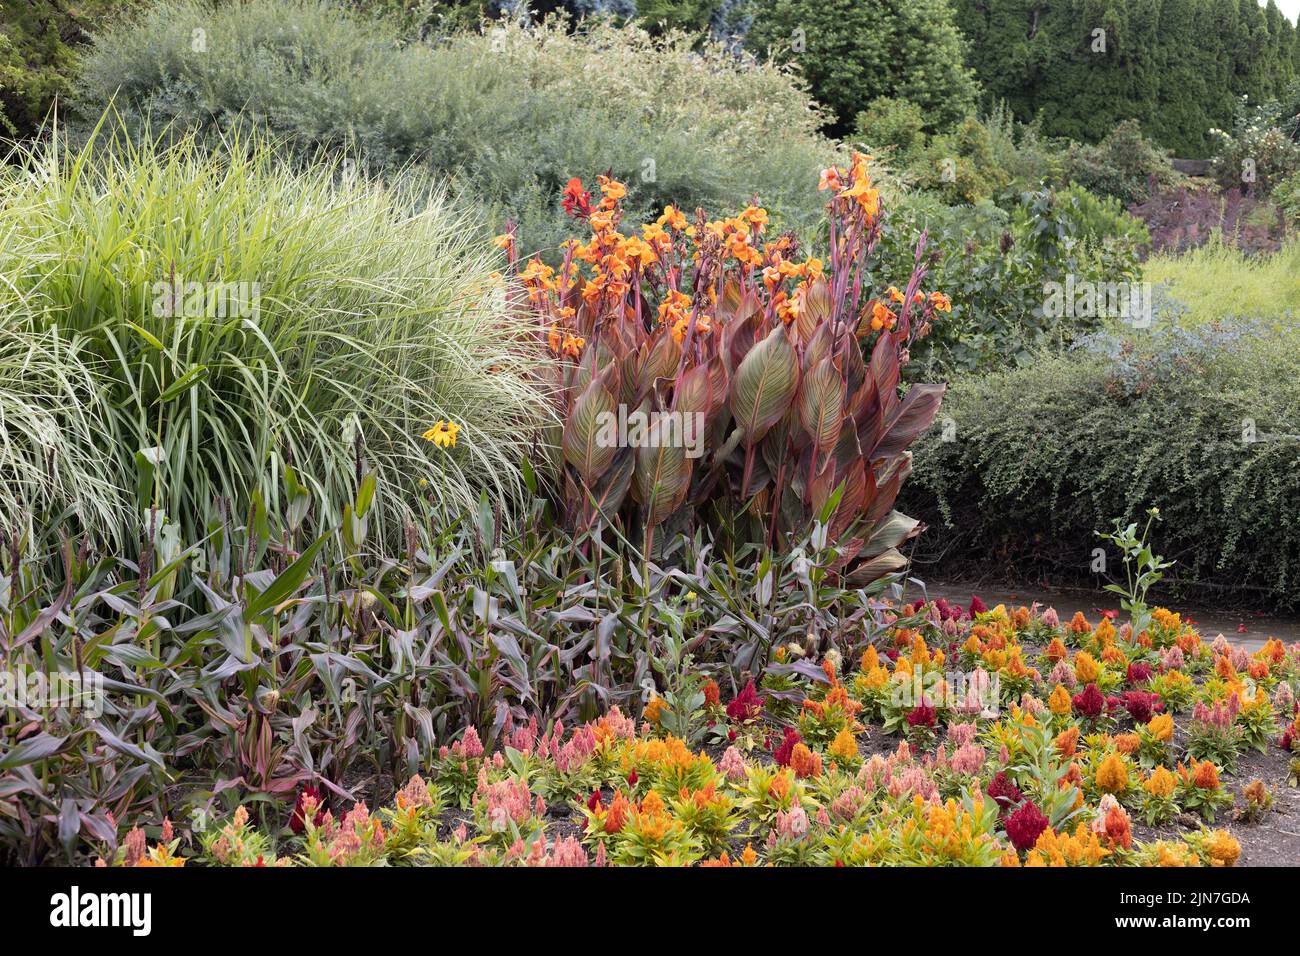 Un jardín de flores de colores cálidos. Foto de stock